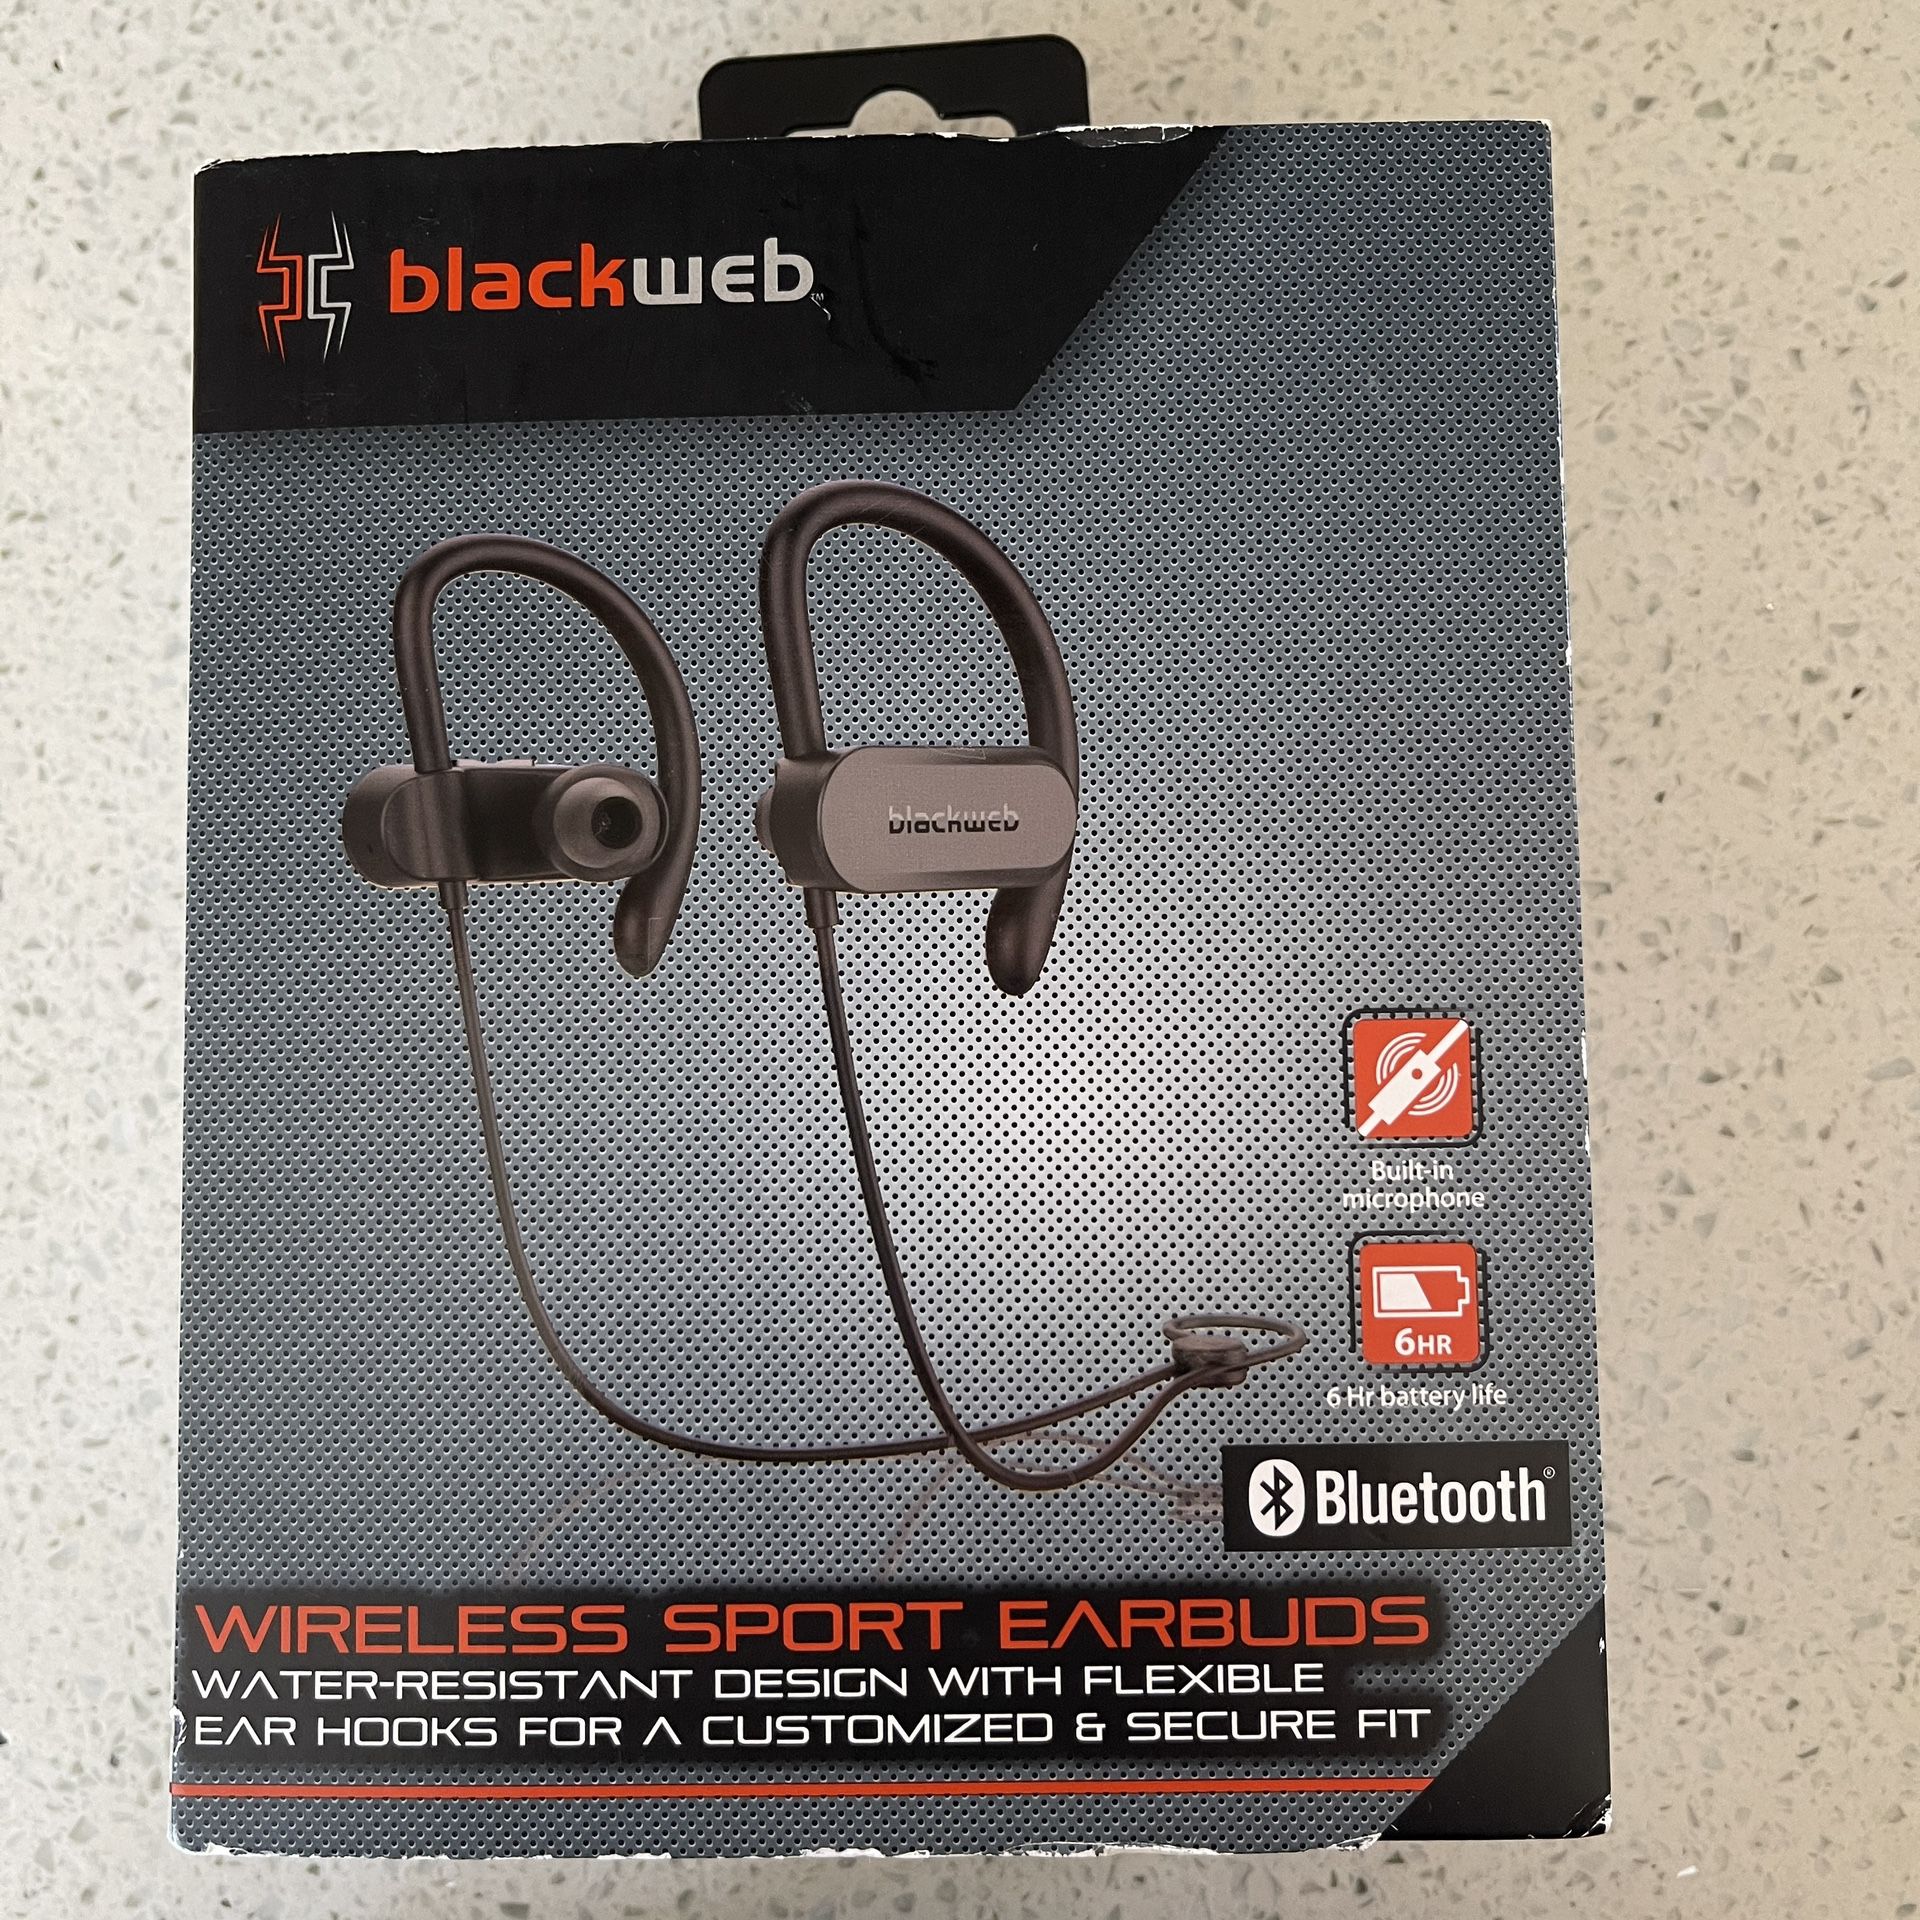 Blackweb wireless sport earbuds